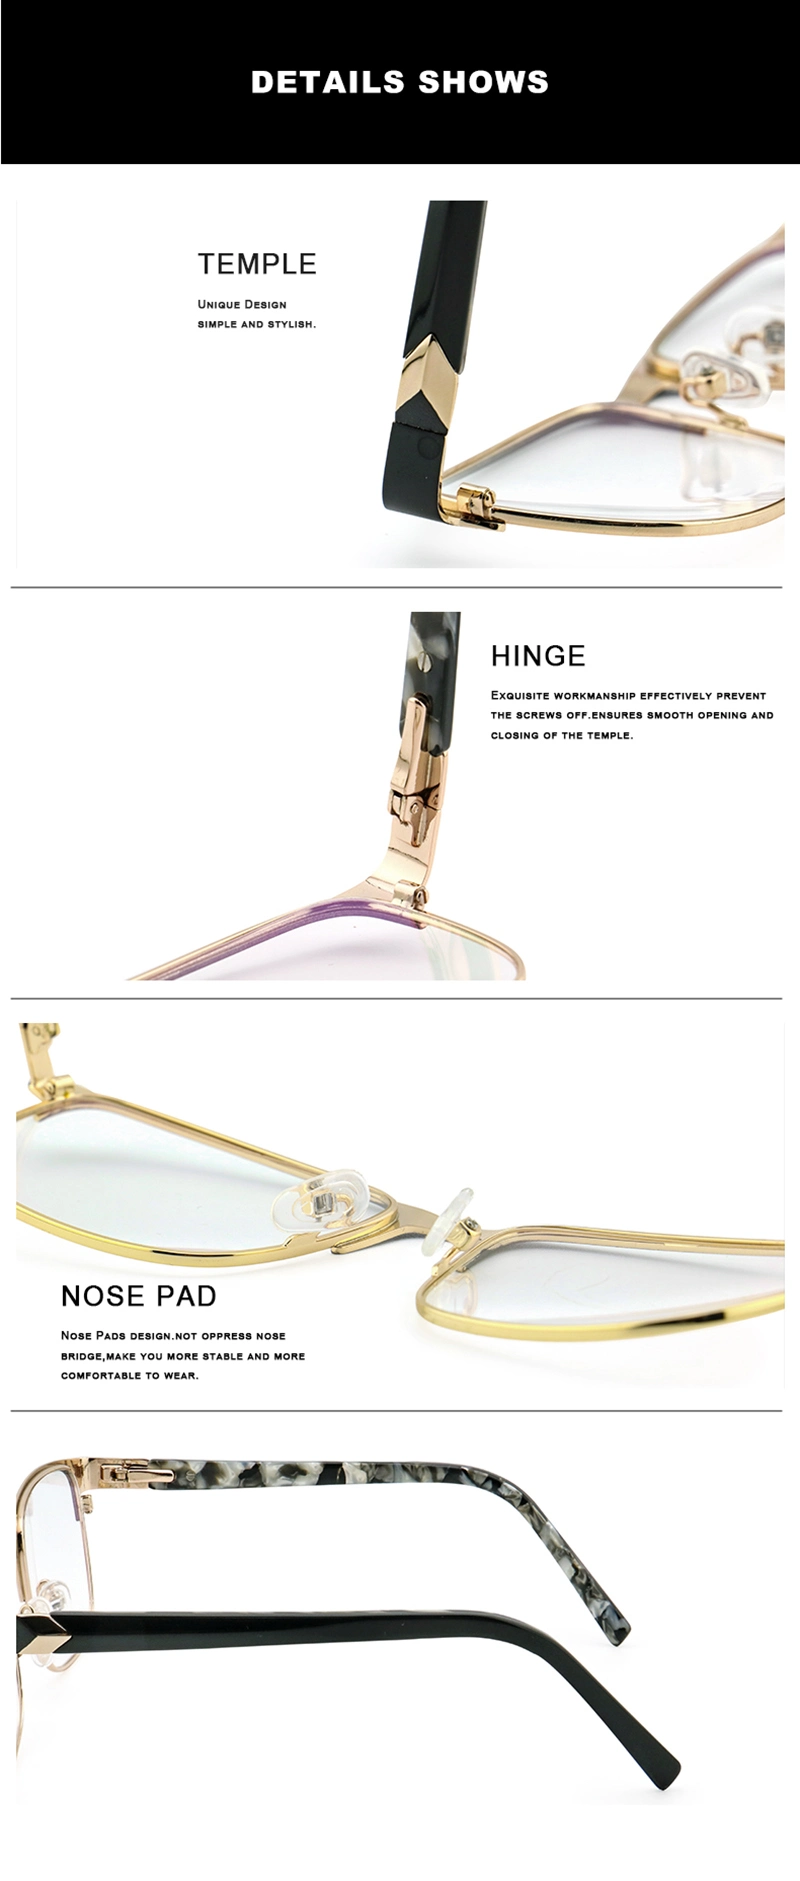 Square Metal Acetate Handmade Tip Optical Frames Glasses Eye Eyeglasses